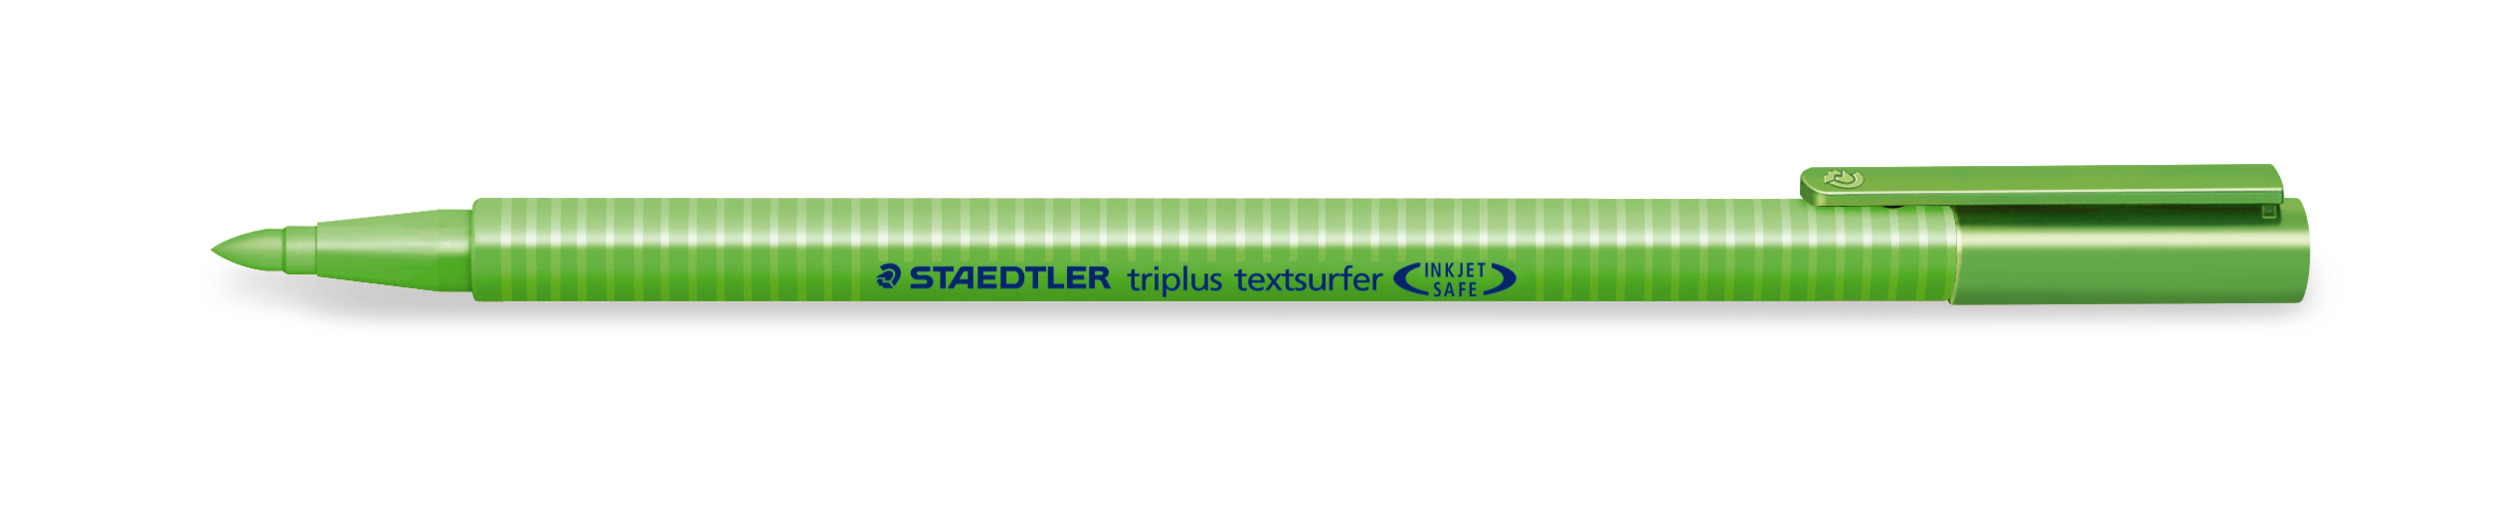 Triplus Textsurfer 362 Textmarker 1-4 mm Grün